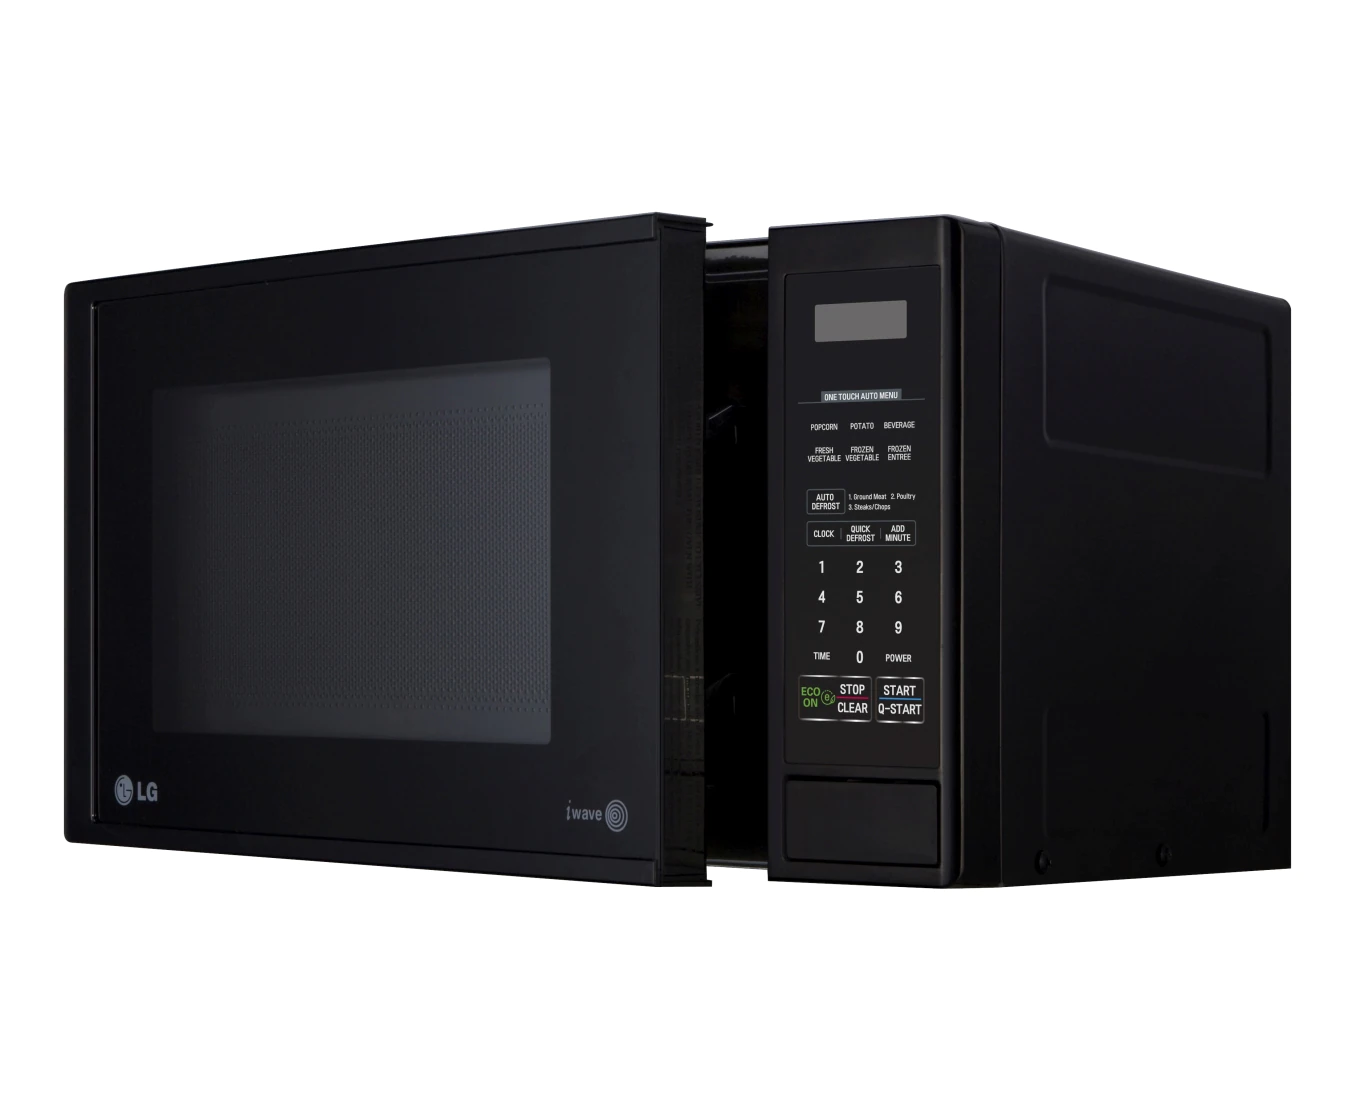 LG 20-Liter Microwave Oven - Black